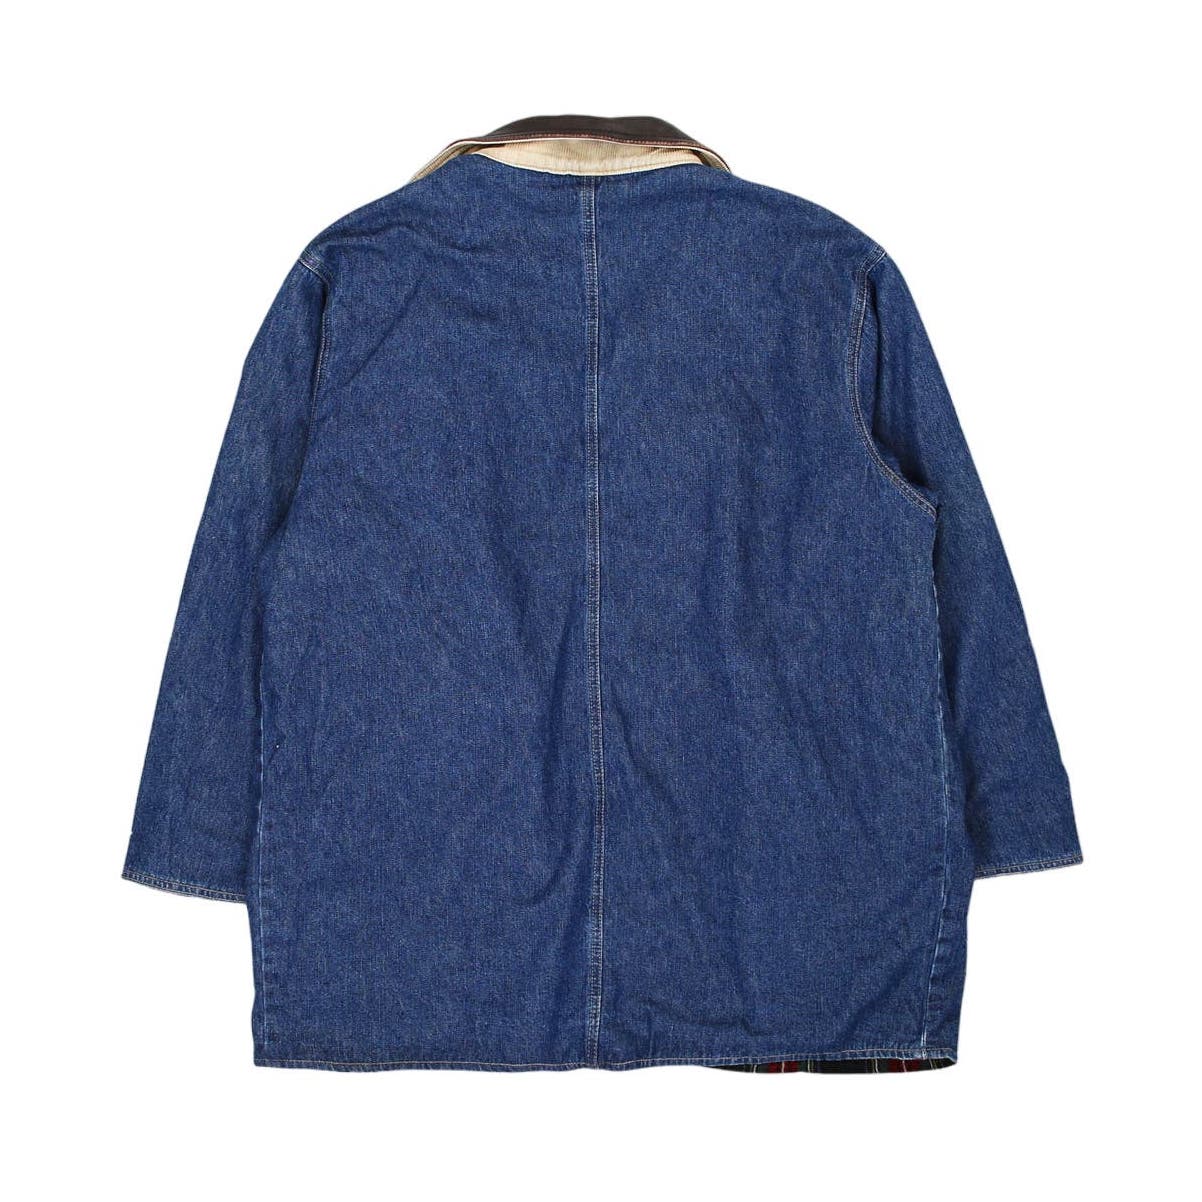 Vintage Reversible Denim and Plaid Jacket